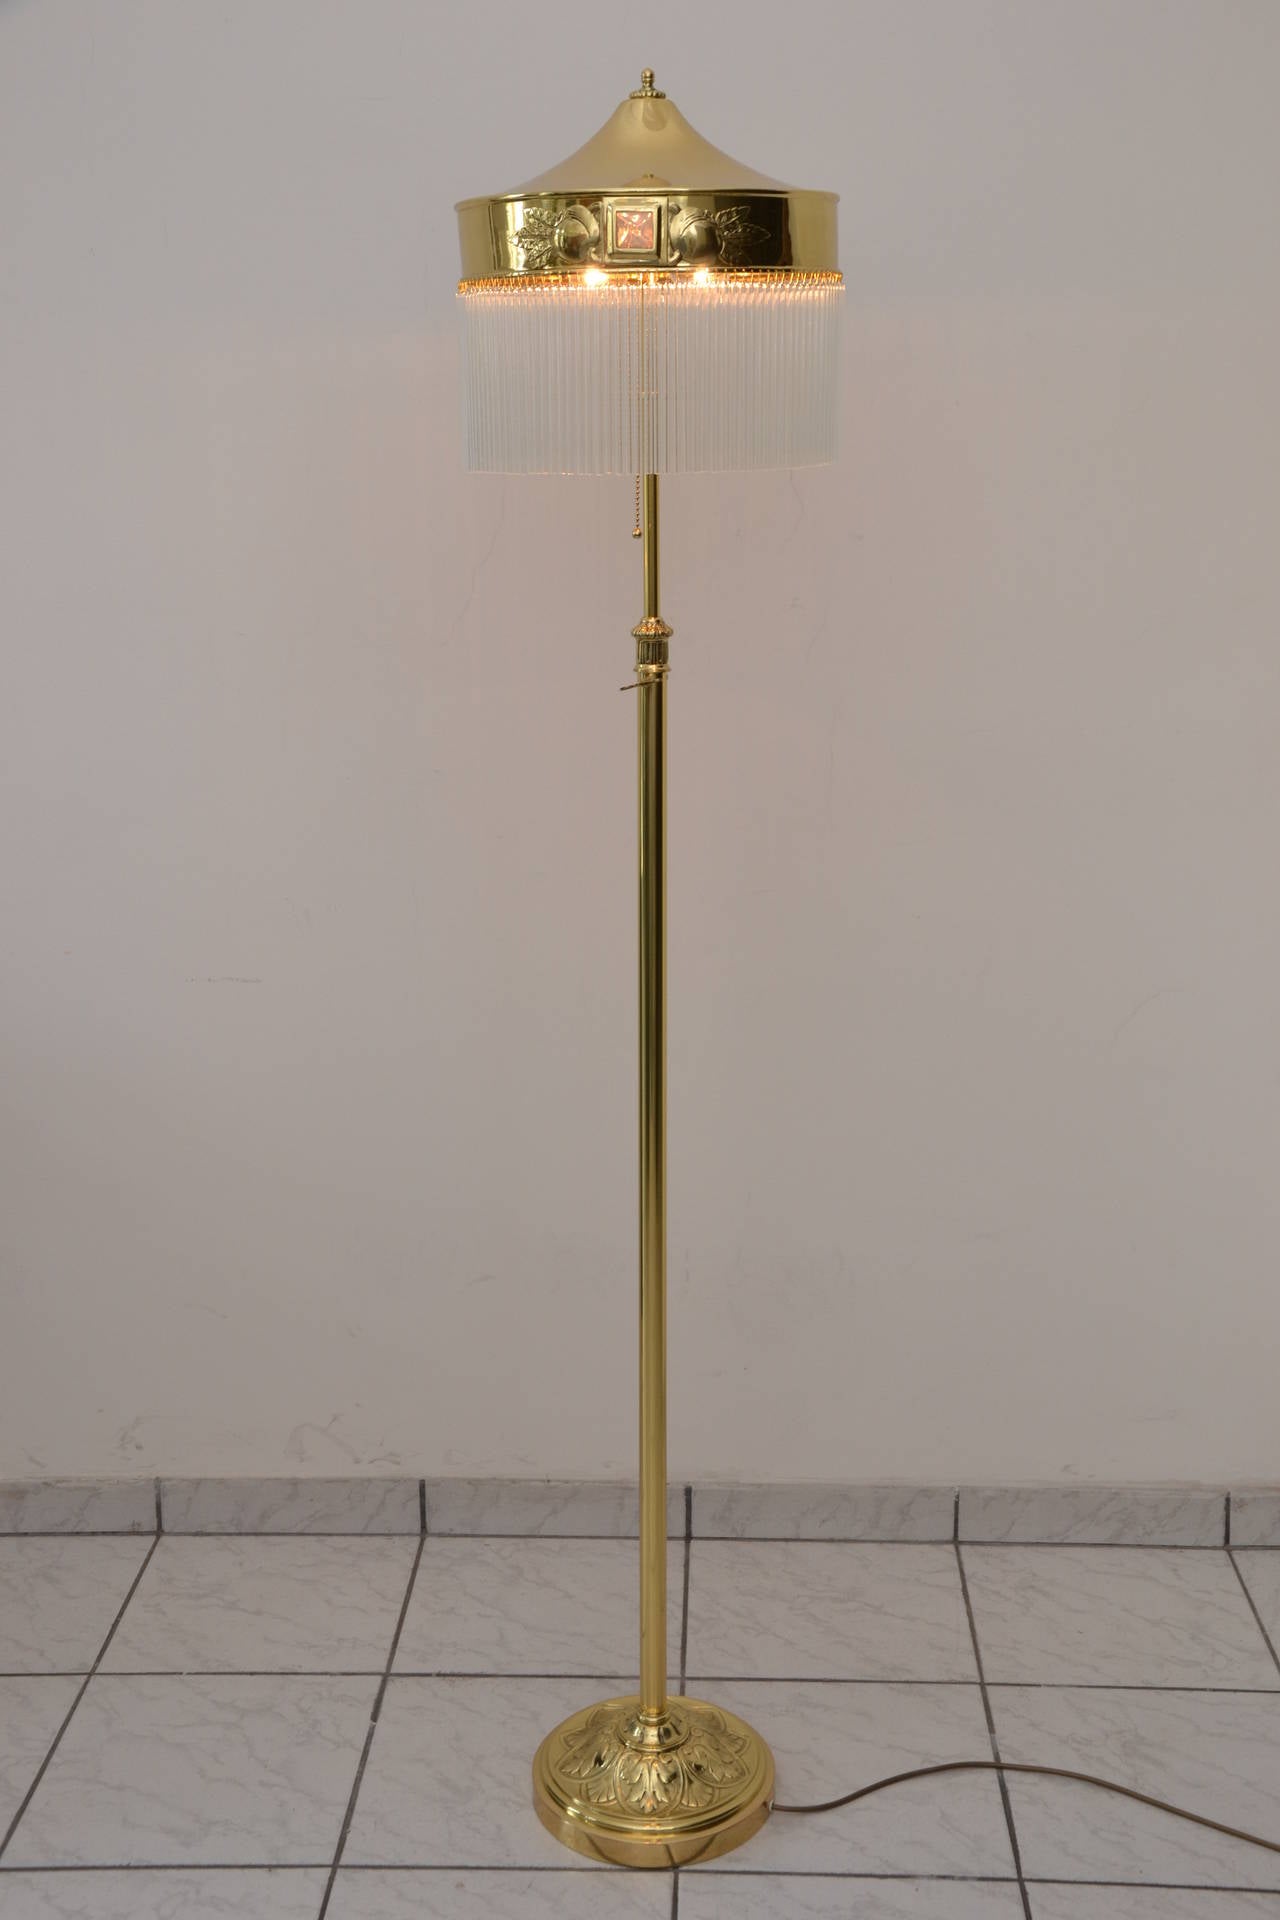 Adjustable Jugendstil Floor Lamp with Opal Glass Stones
polished and stove enamelled
replaced glass sticks
high is adjustable from 150cm - 170cm